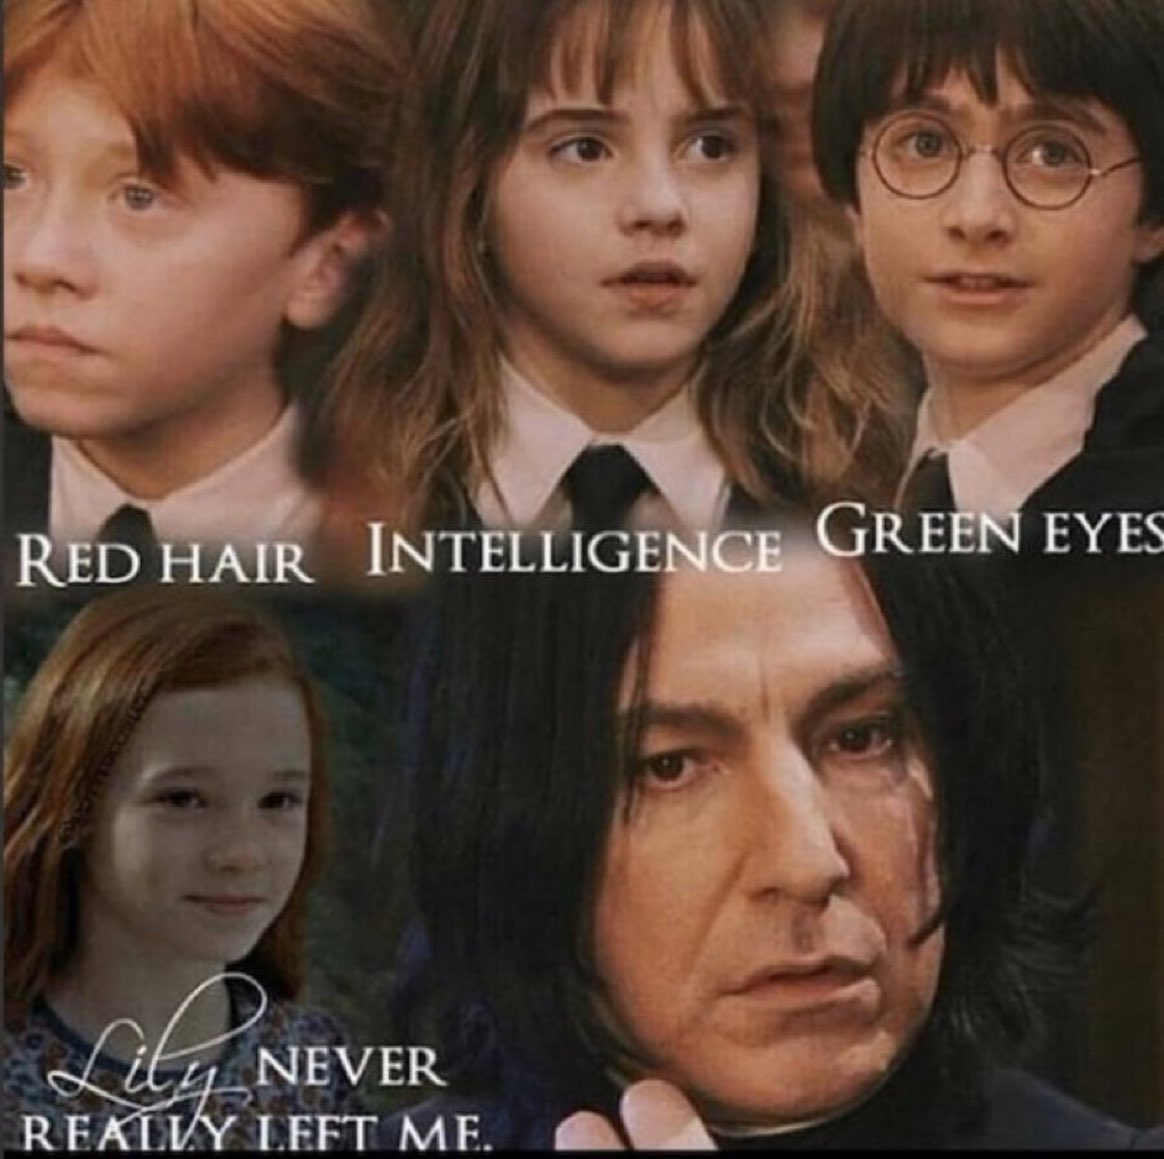 Red hair. Intelligence. Green eyes.